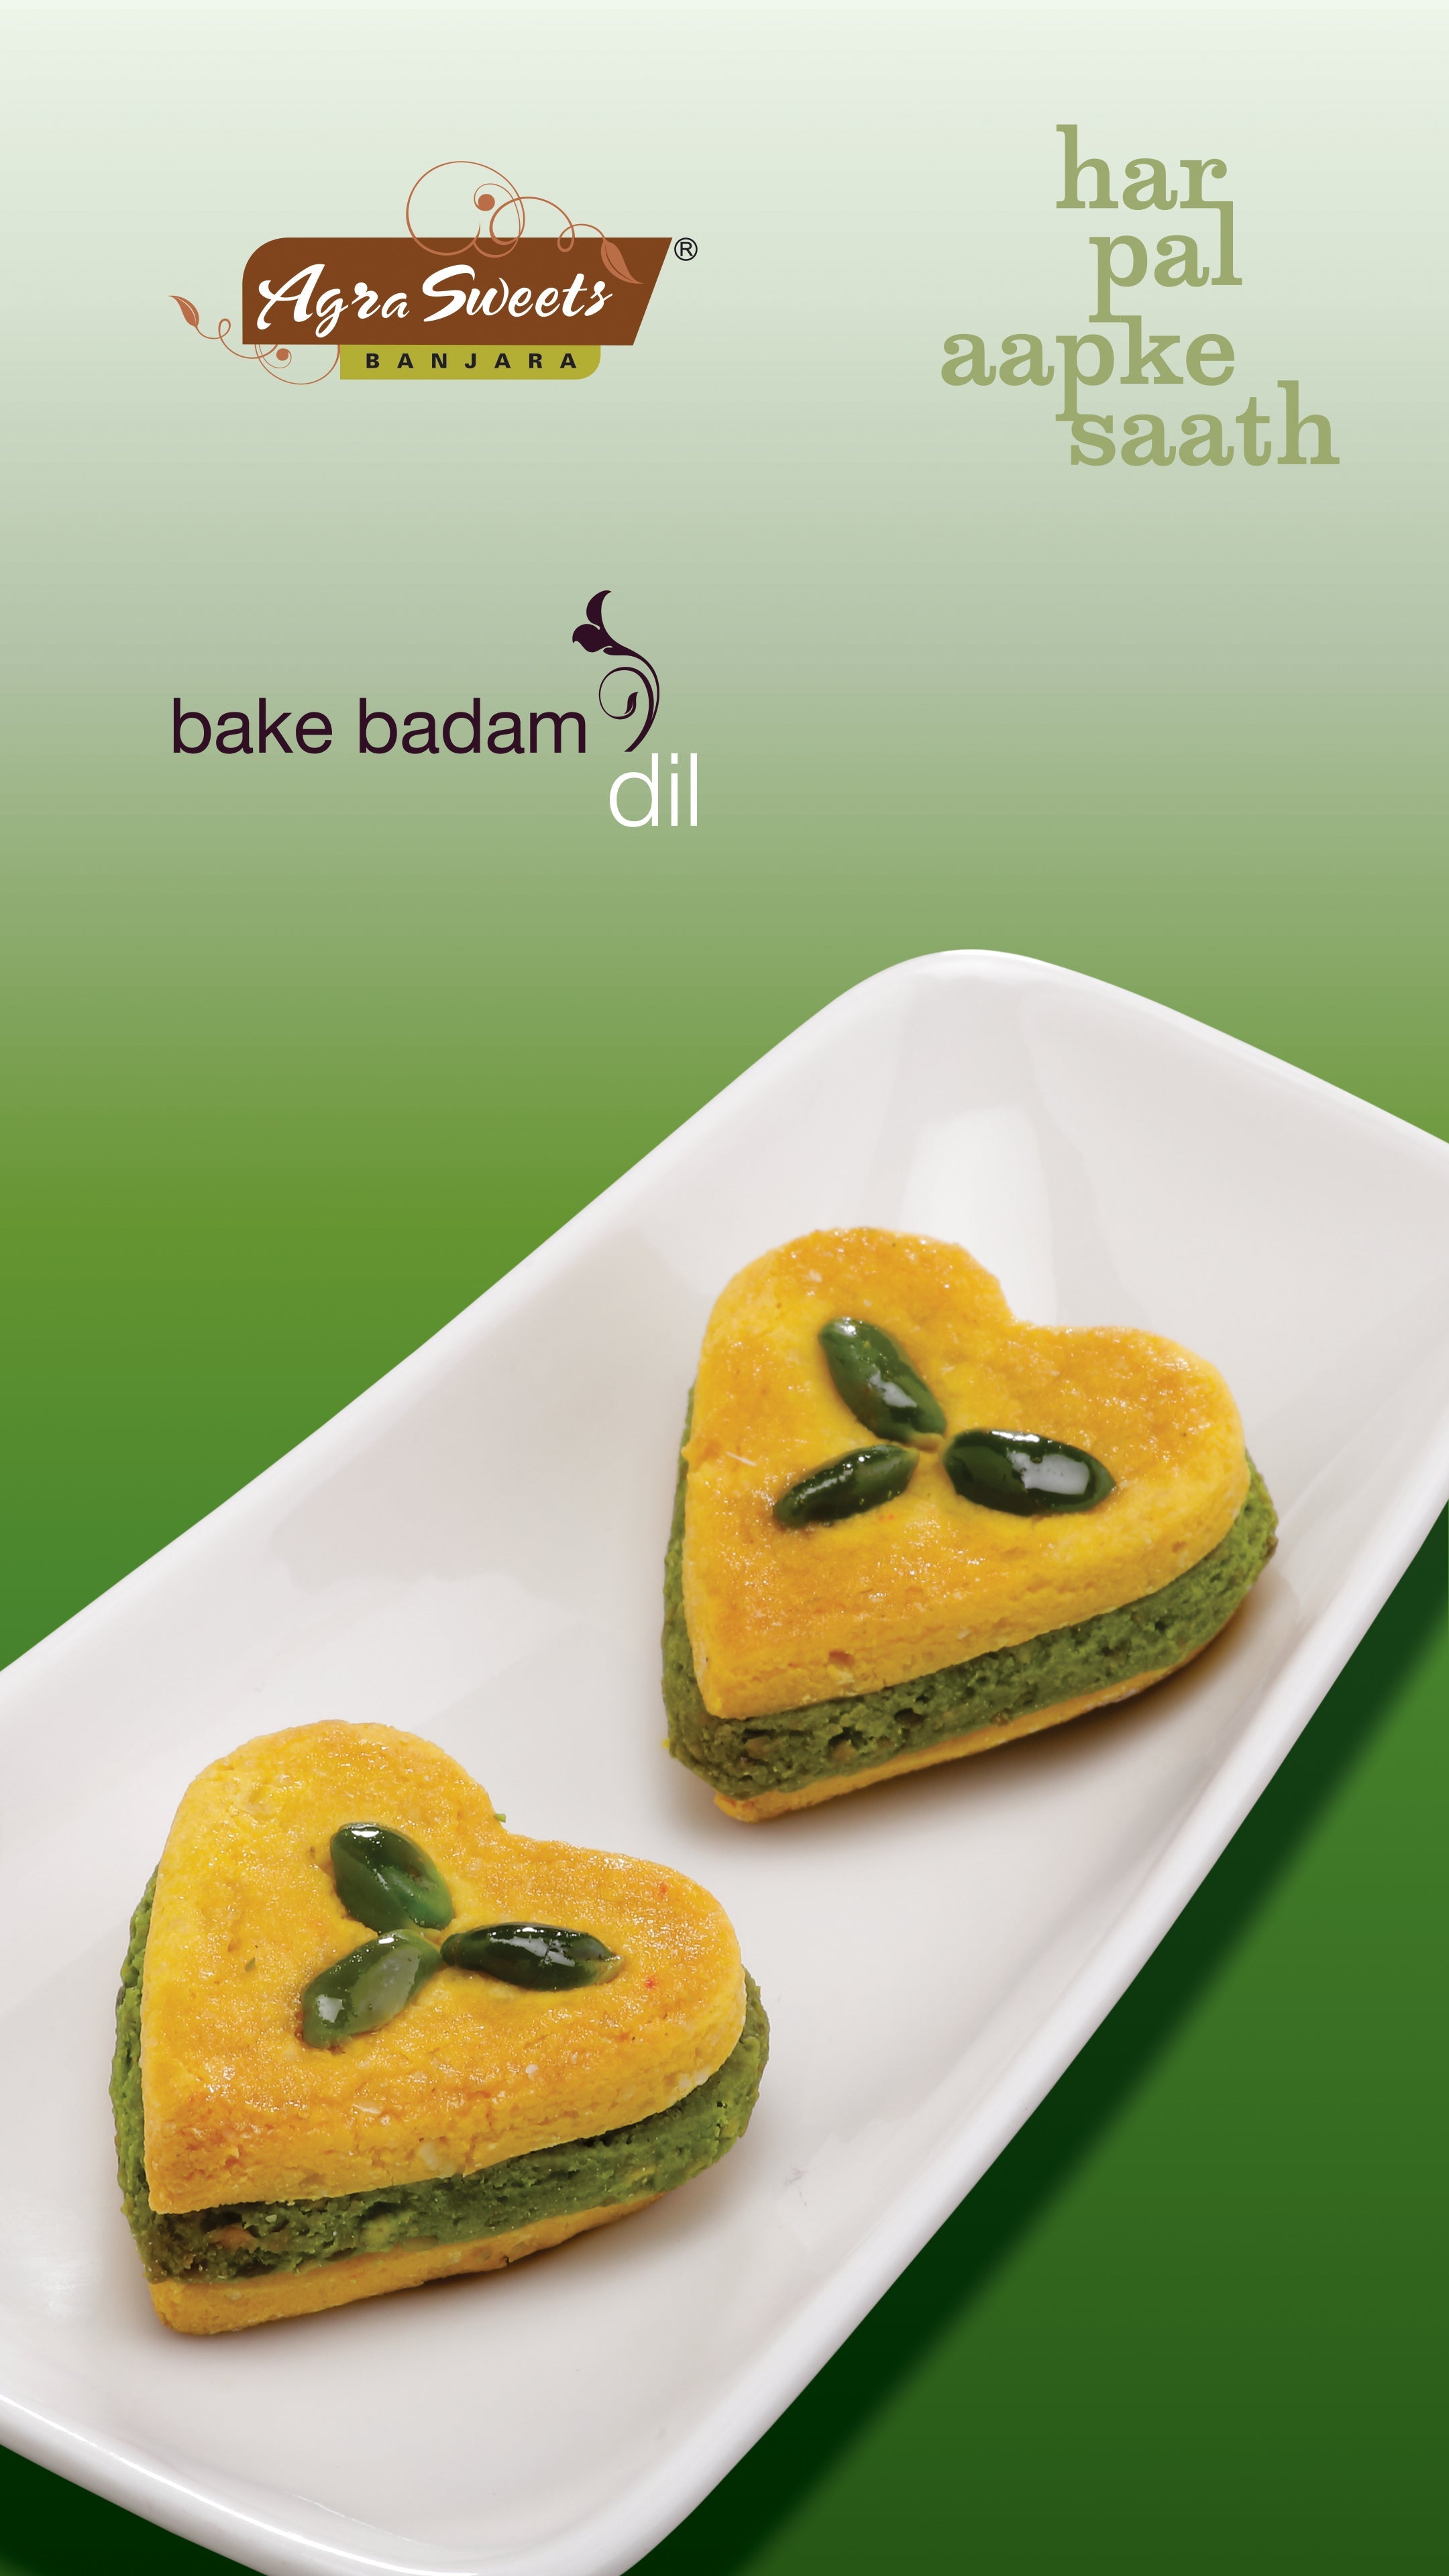 Bake Badam Dil